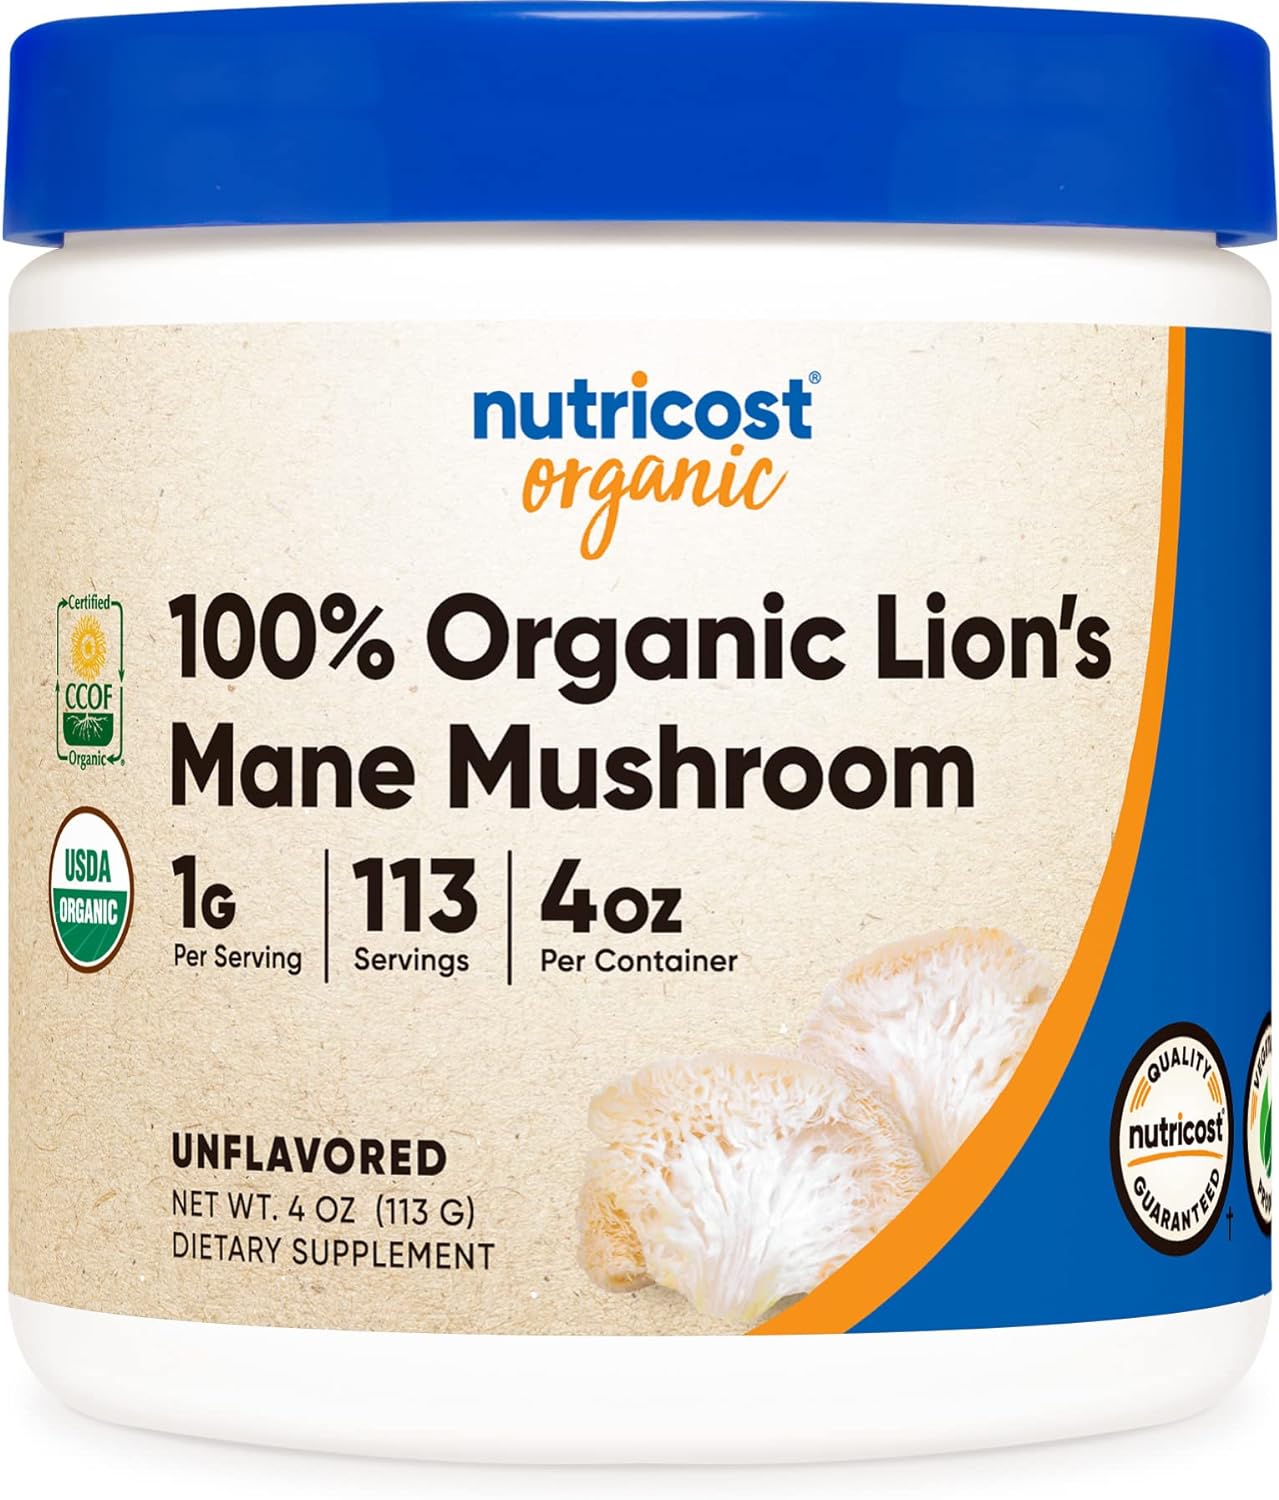 Nutricost Organic Lion's Mane Mushroom Powder 4 - Certified USDA Organic